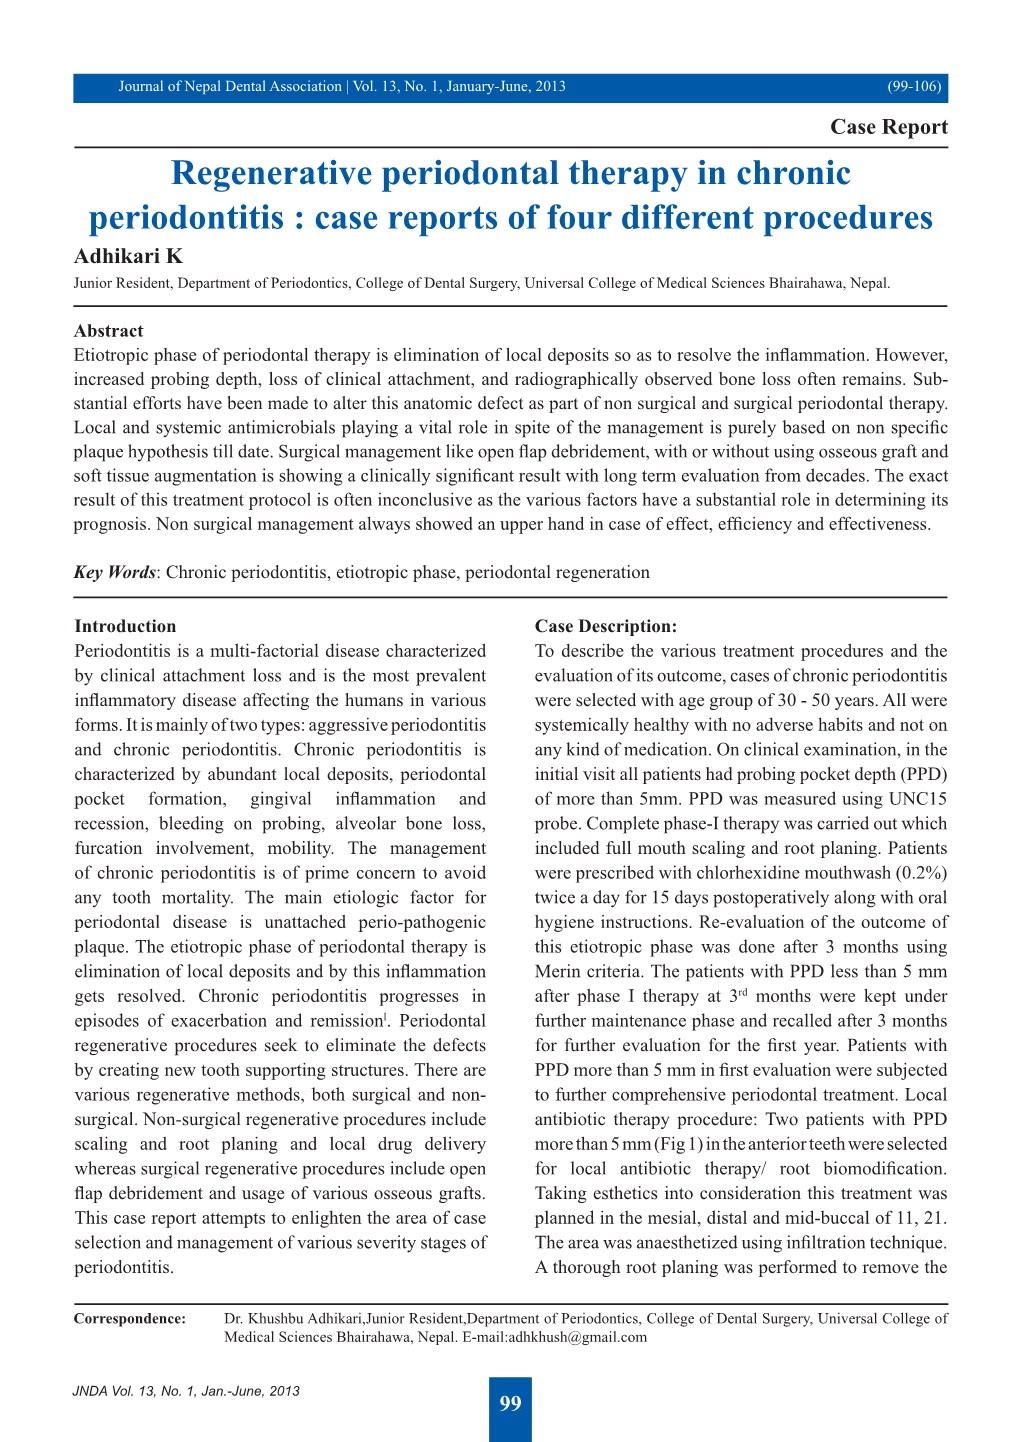 Regenerative Periodontal Therapy in Chronic Periodontitis : Case Reports